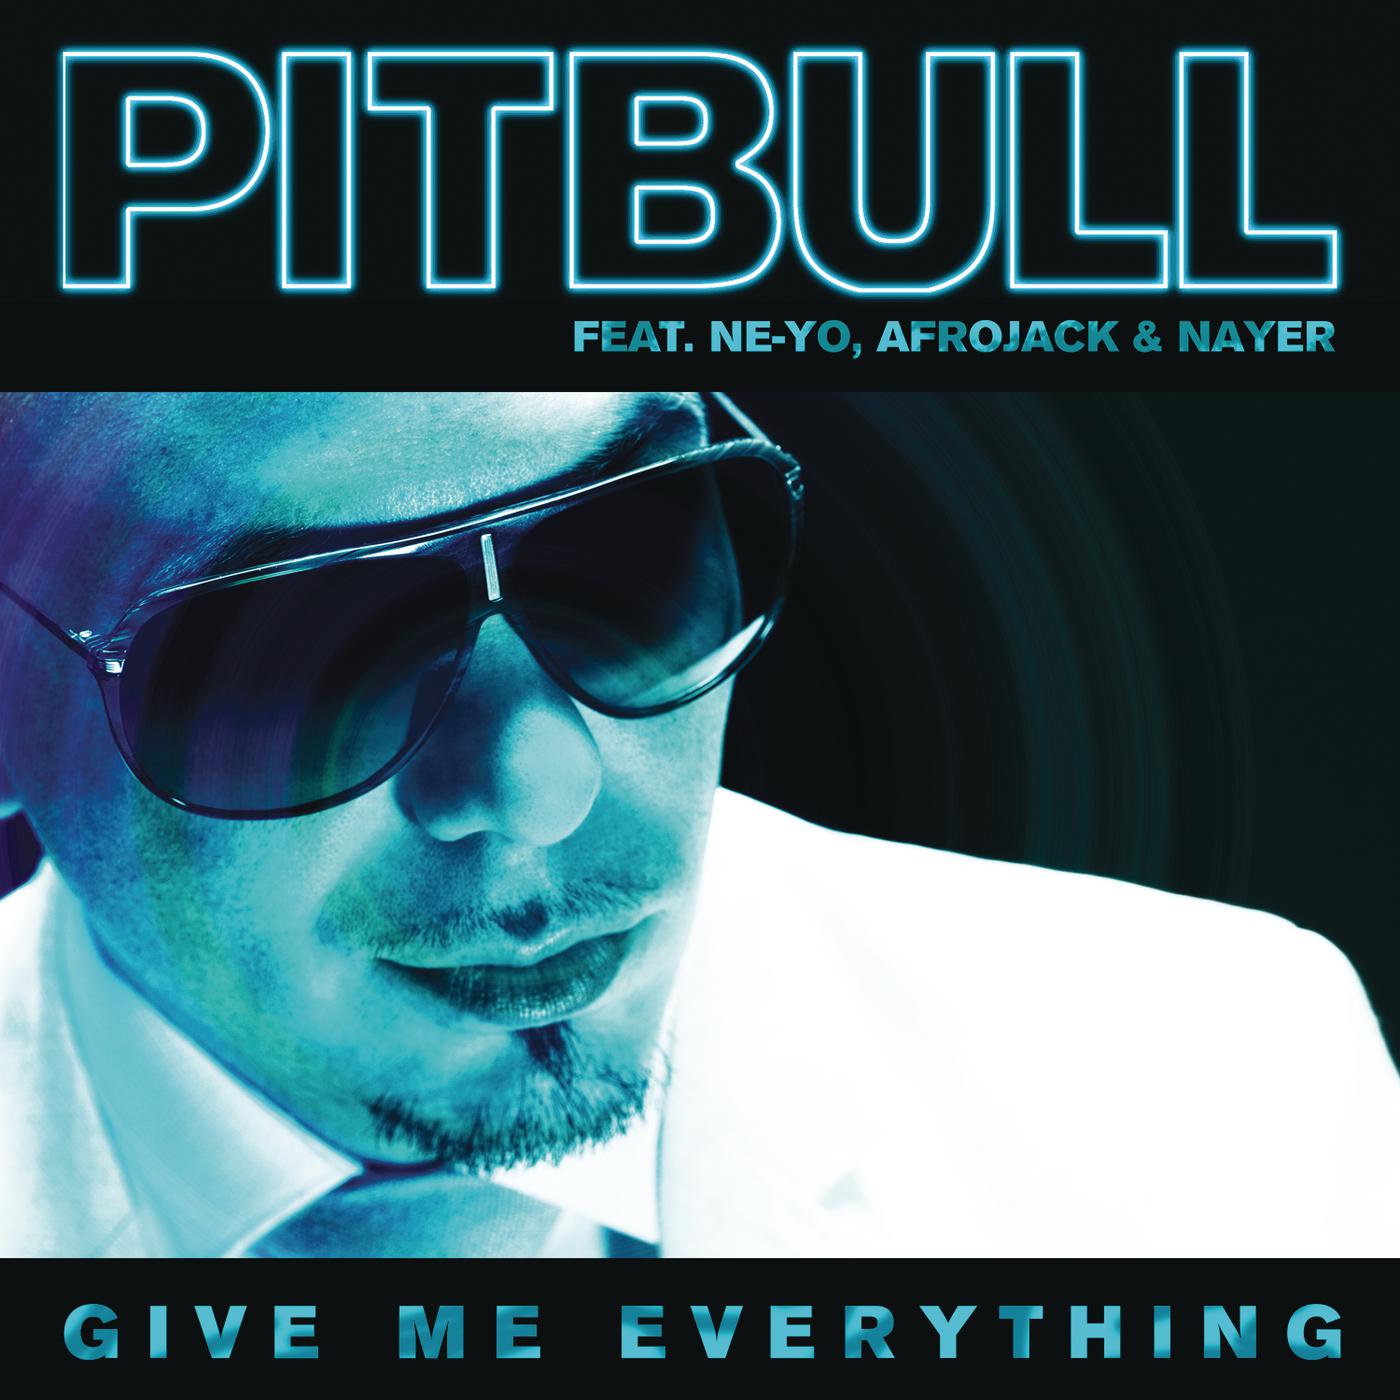 Ne yo everything. Give me everything афроджек. Афроджек питбуль. Pitbull & ne-yo & Afrojack & Nayer - give me everything. Give me everything Pitbull.